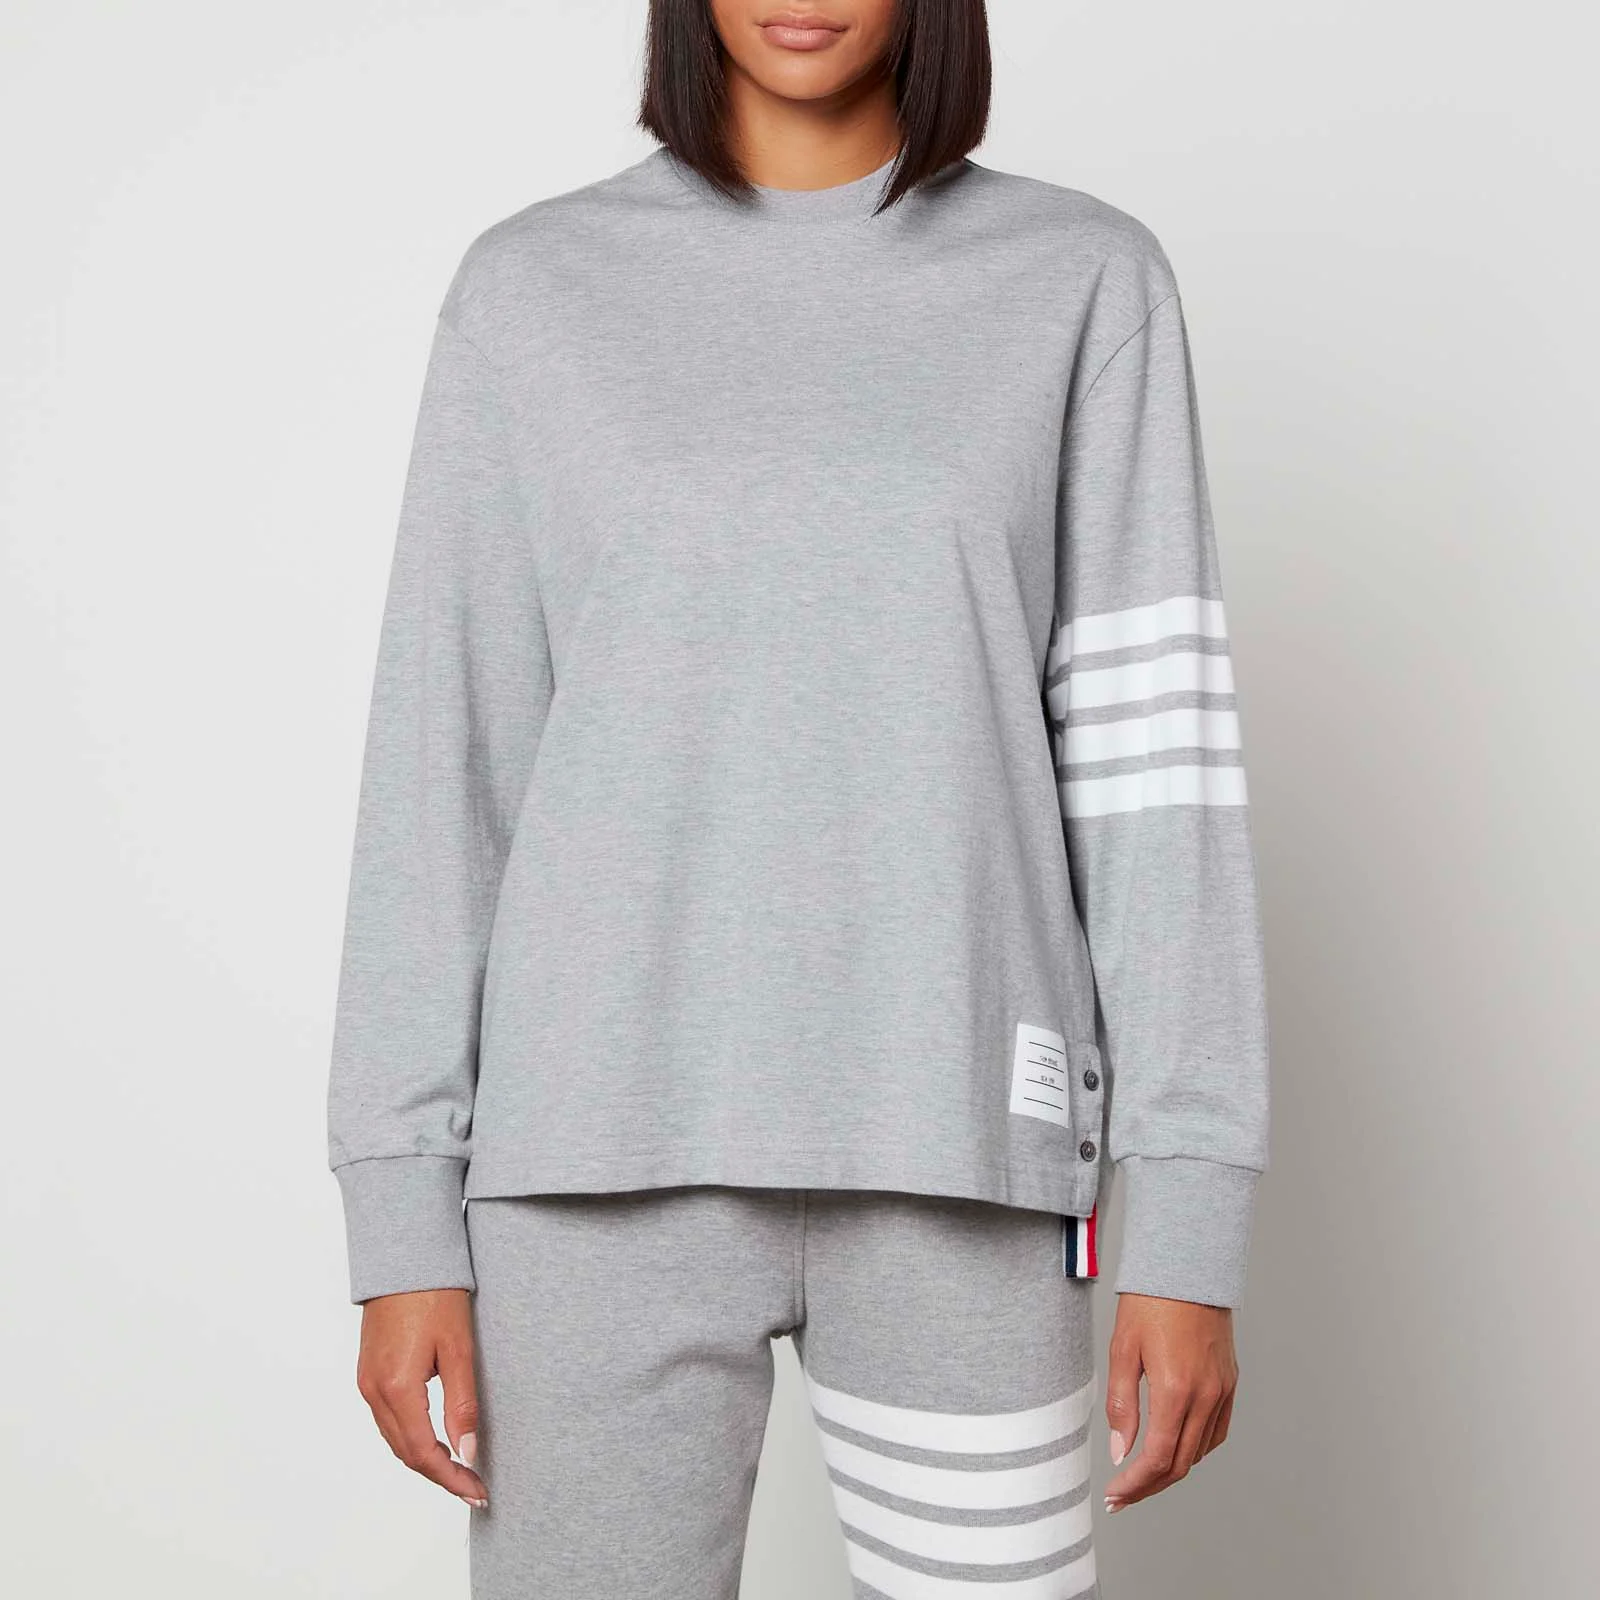 Thom Browne Women's Long Sleeve Oversized T-Shirt - Light Grey Image 1